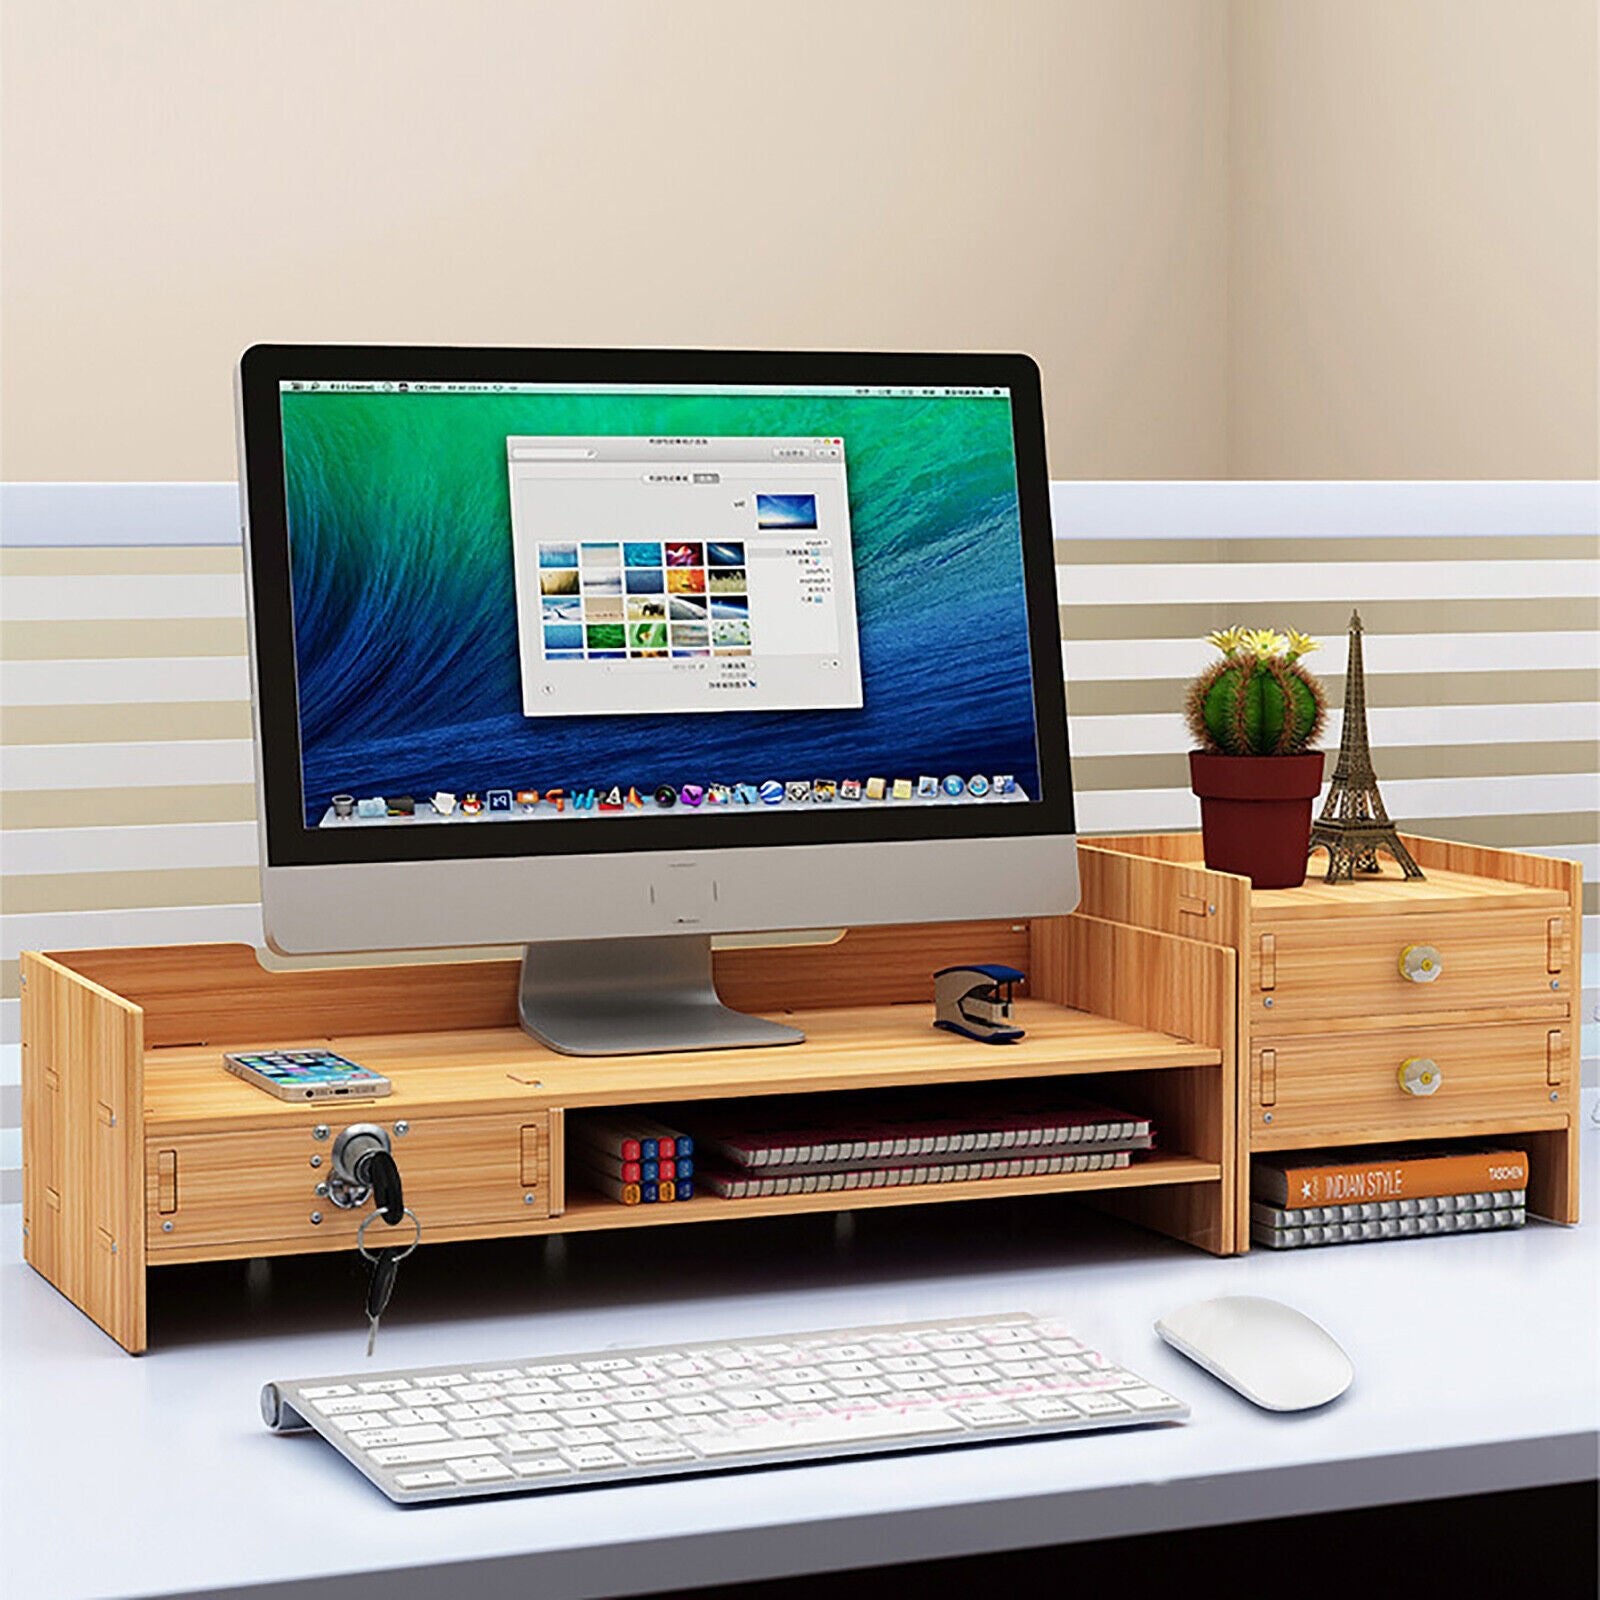 Wooden Desk Organizer w/ Lock File Office Supplies Desktop Tabletop Rack Holder